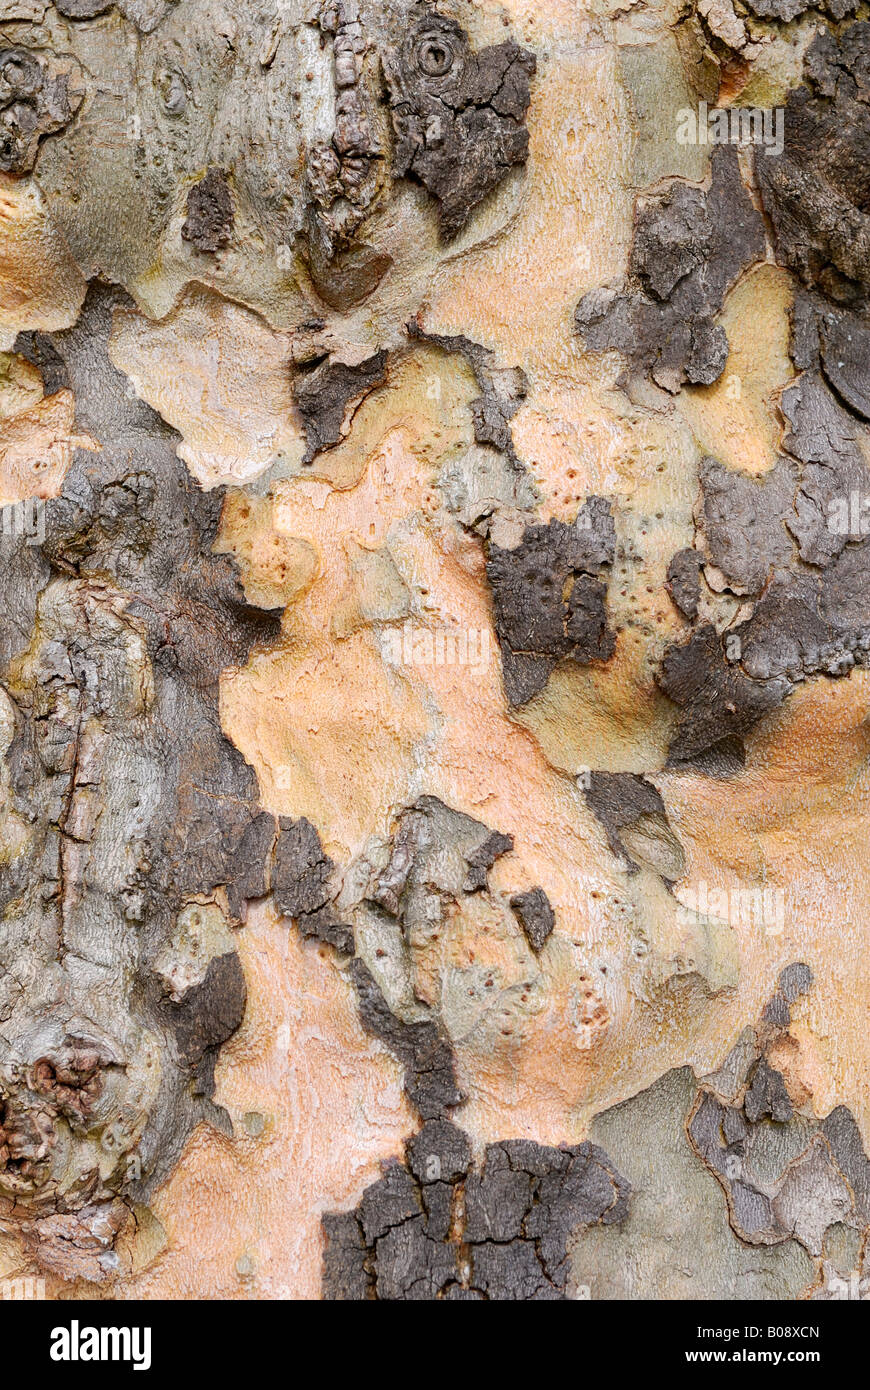 Bark texture, sycamore or plane tree (Platanus) Stock Photo